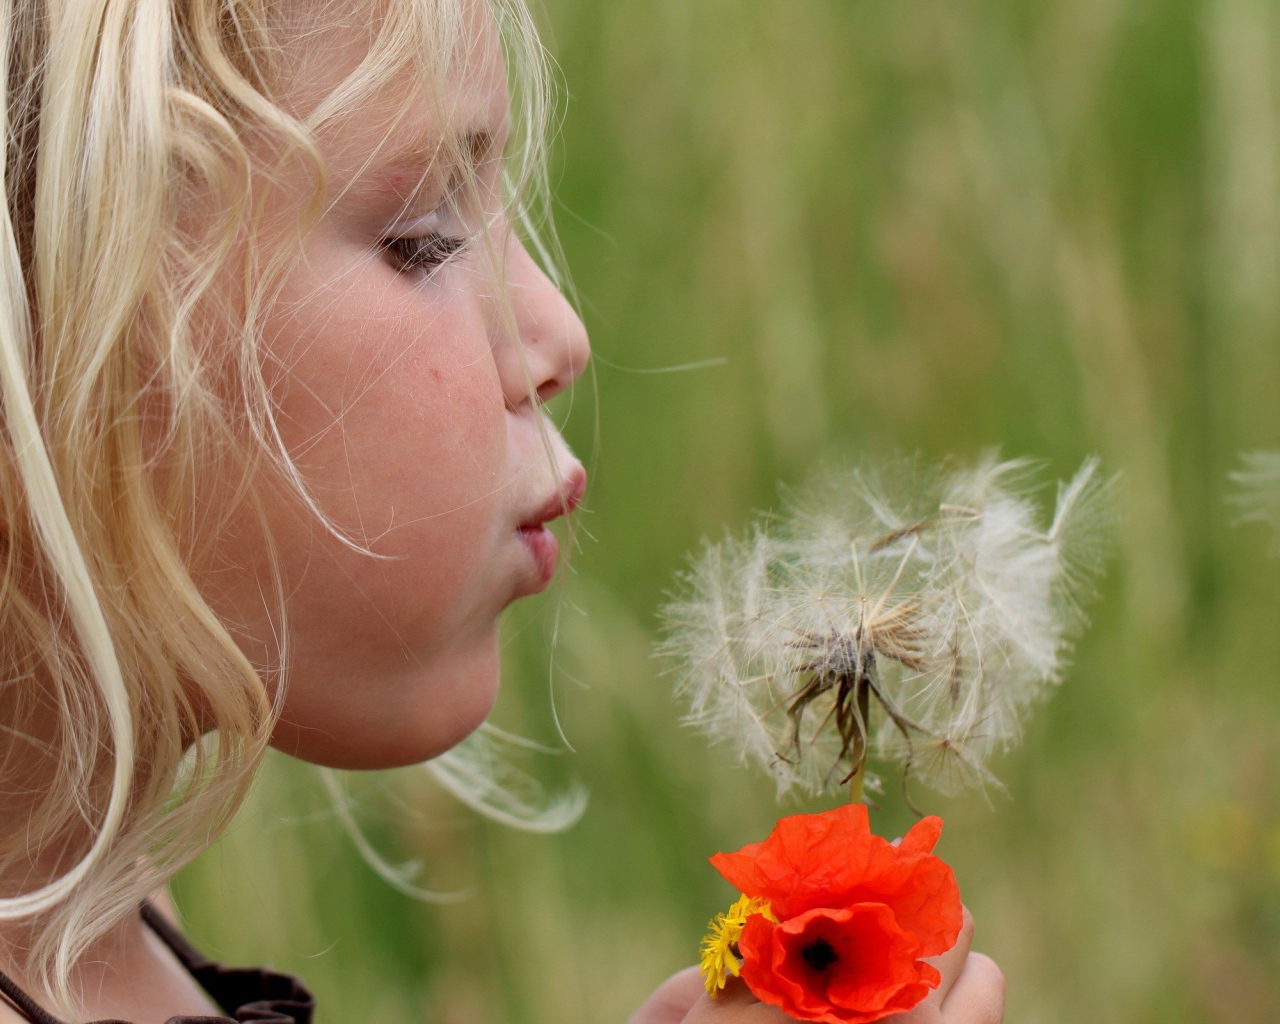 Девочка дует на цветок одуванчик